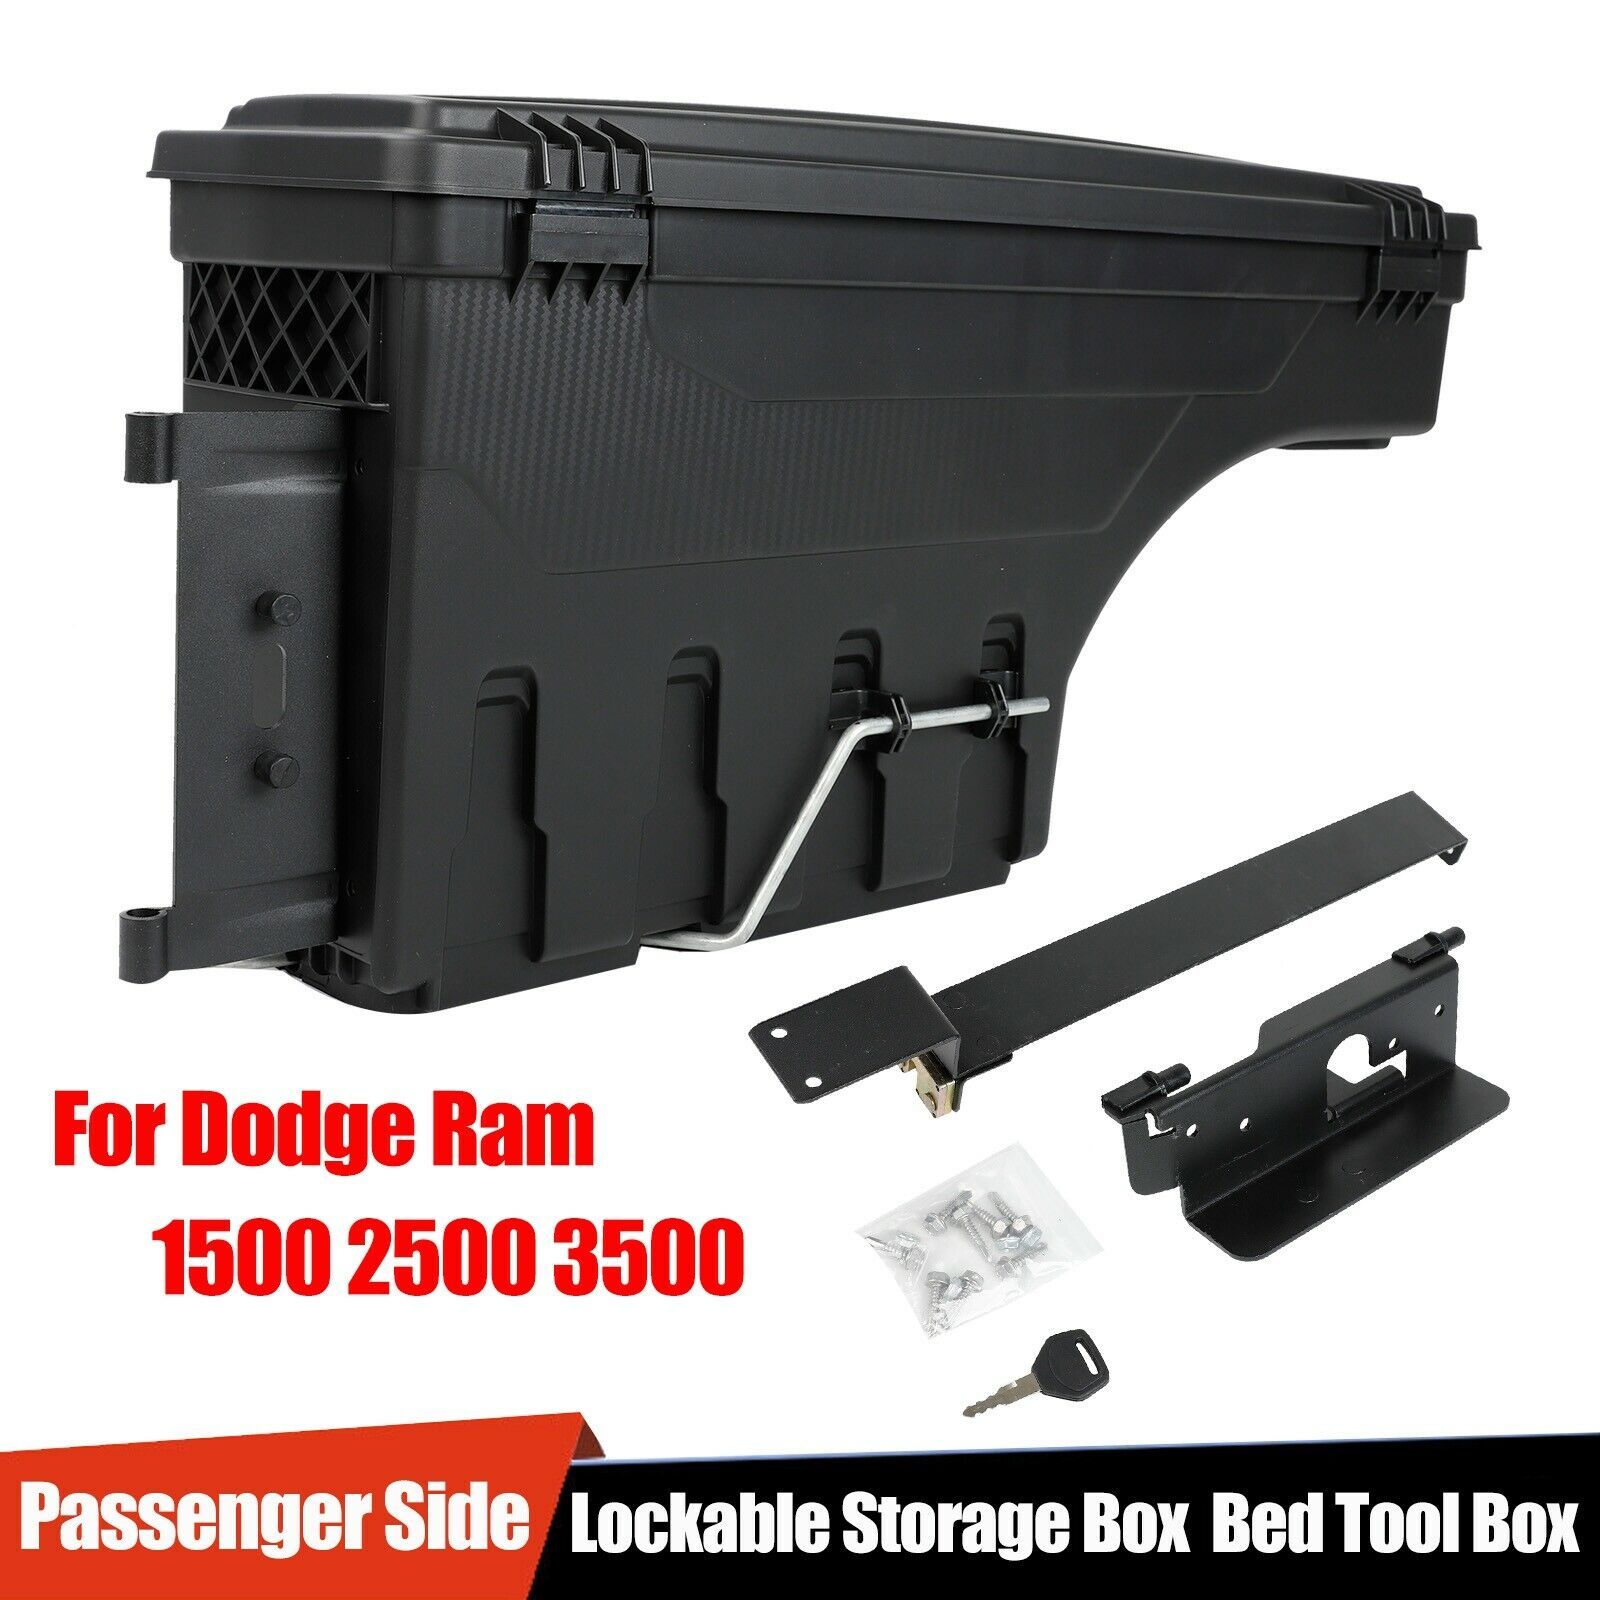 Lockable Storage Truck Bed Tool Box Passenger Side For Dodge Ram 1500 2500 3500